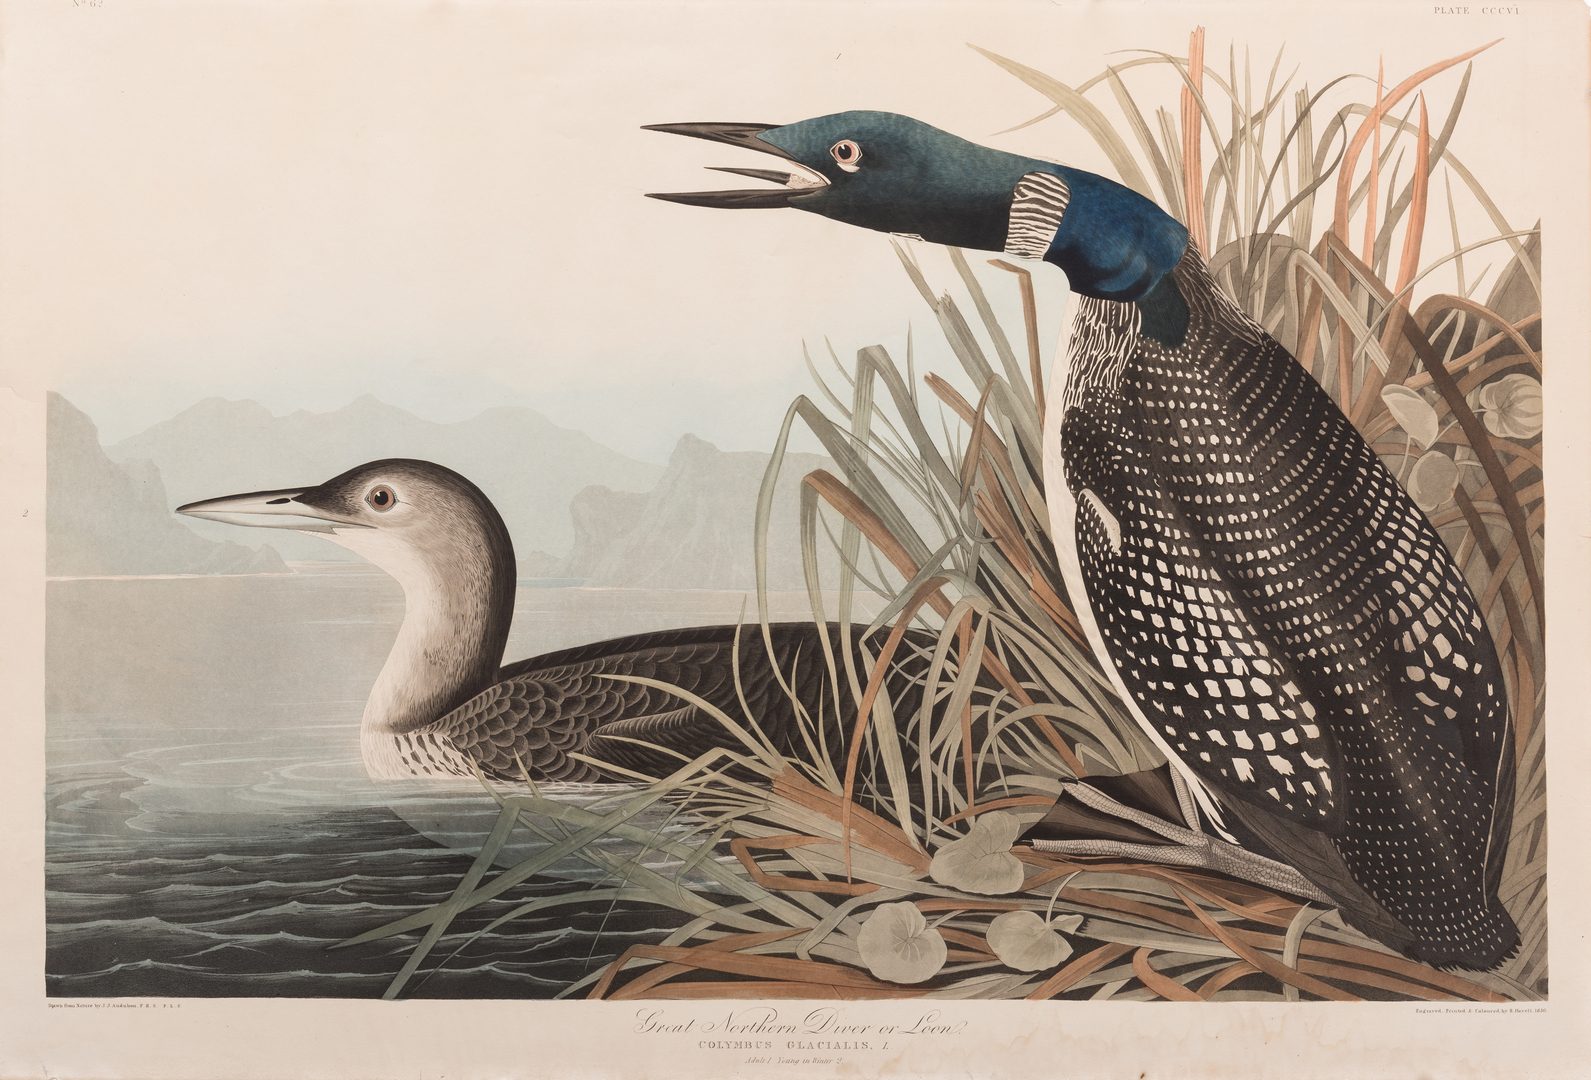 Lot 452: J.J. Audubon, Great Northern Diver or Loon